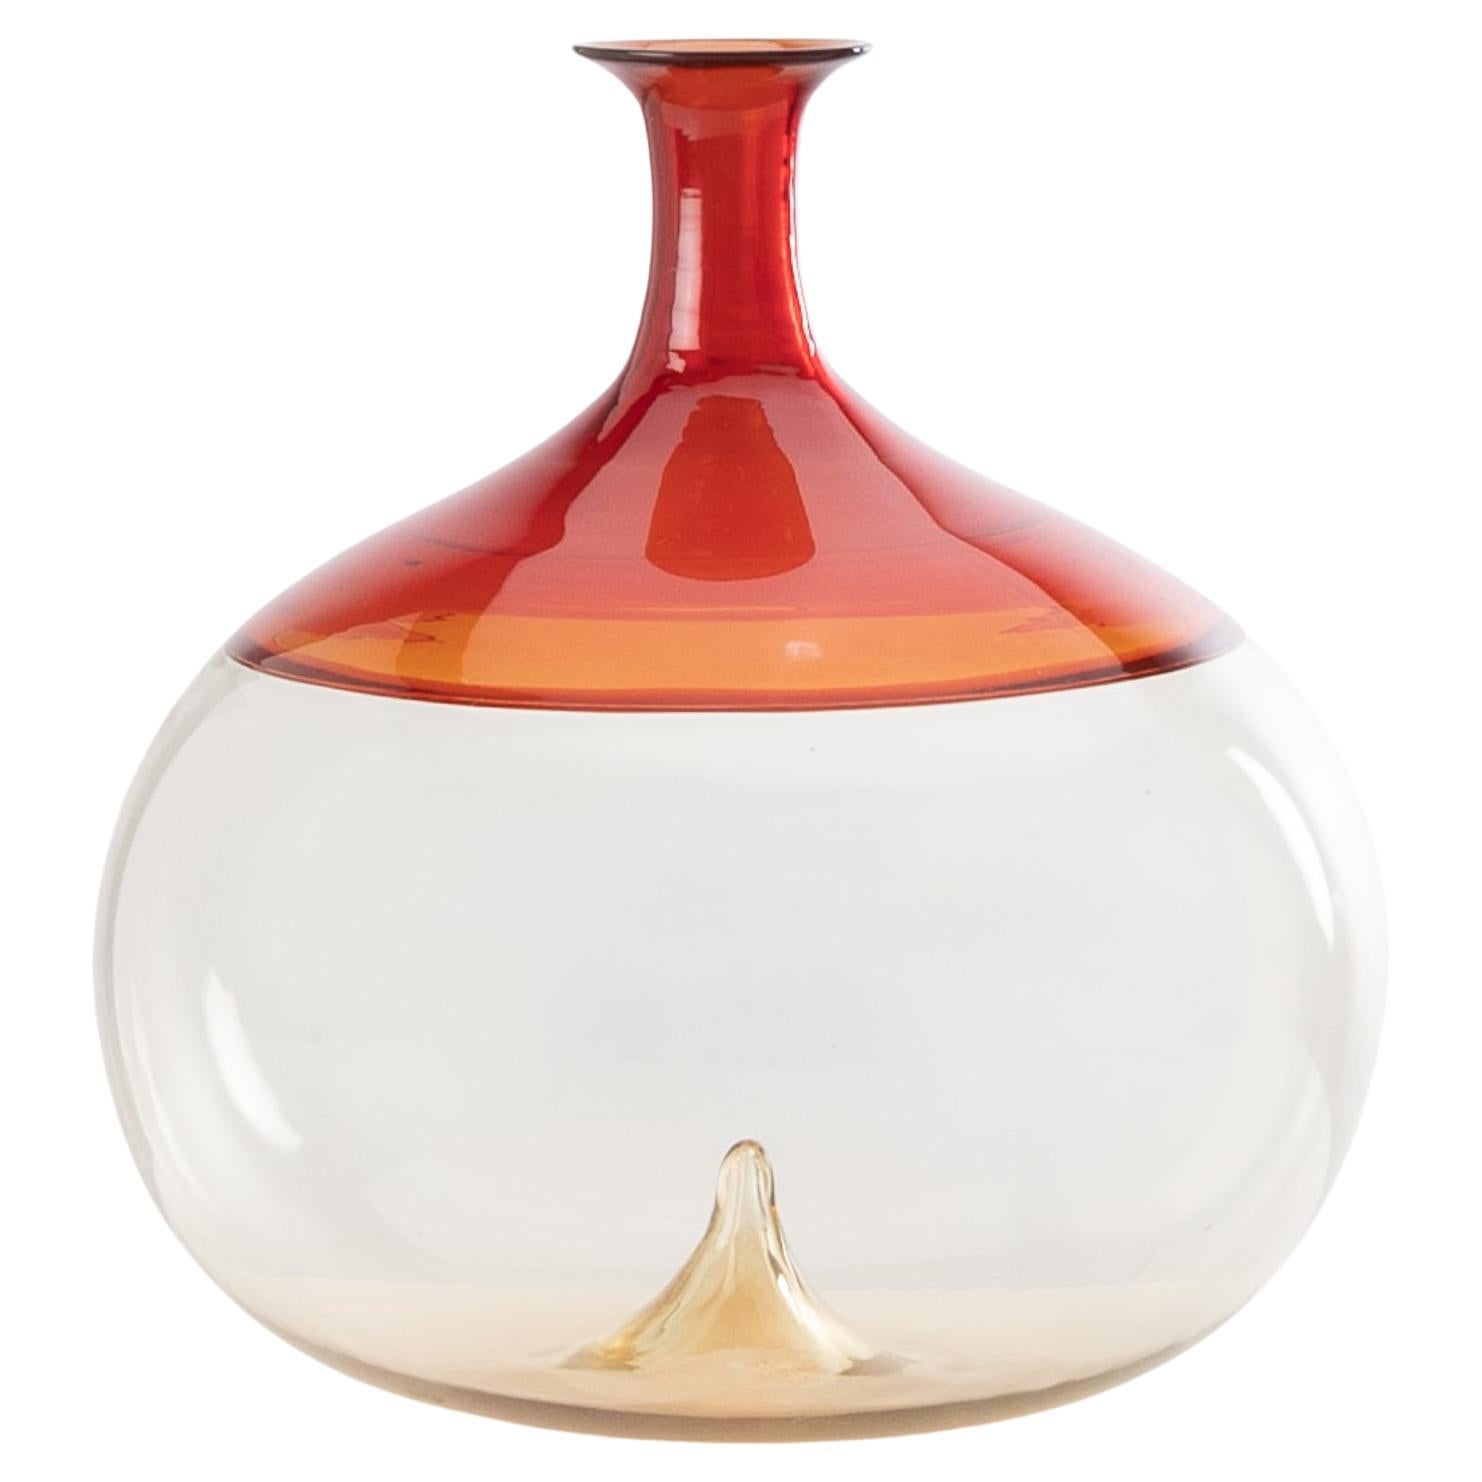 Bolle Incalmo Blown Glass Vase 'Red, Straw' by Tapio Wirkkala Venini Murano